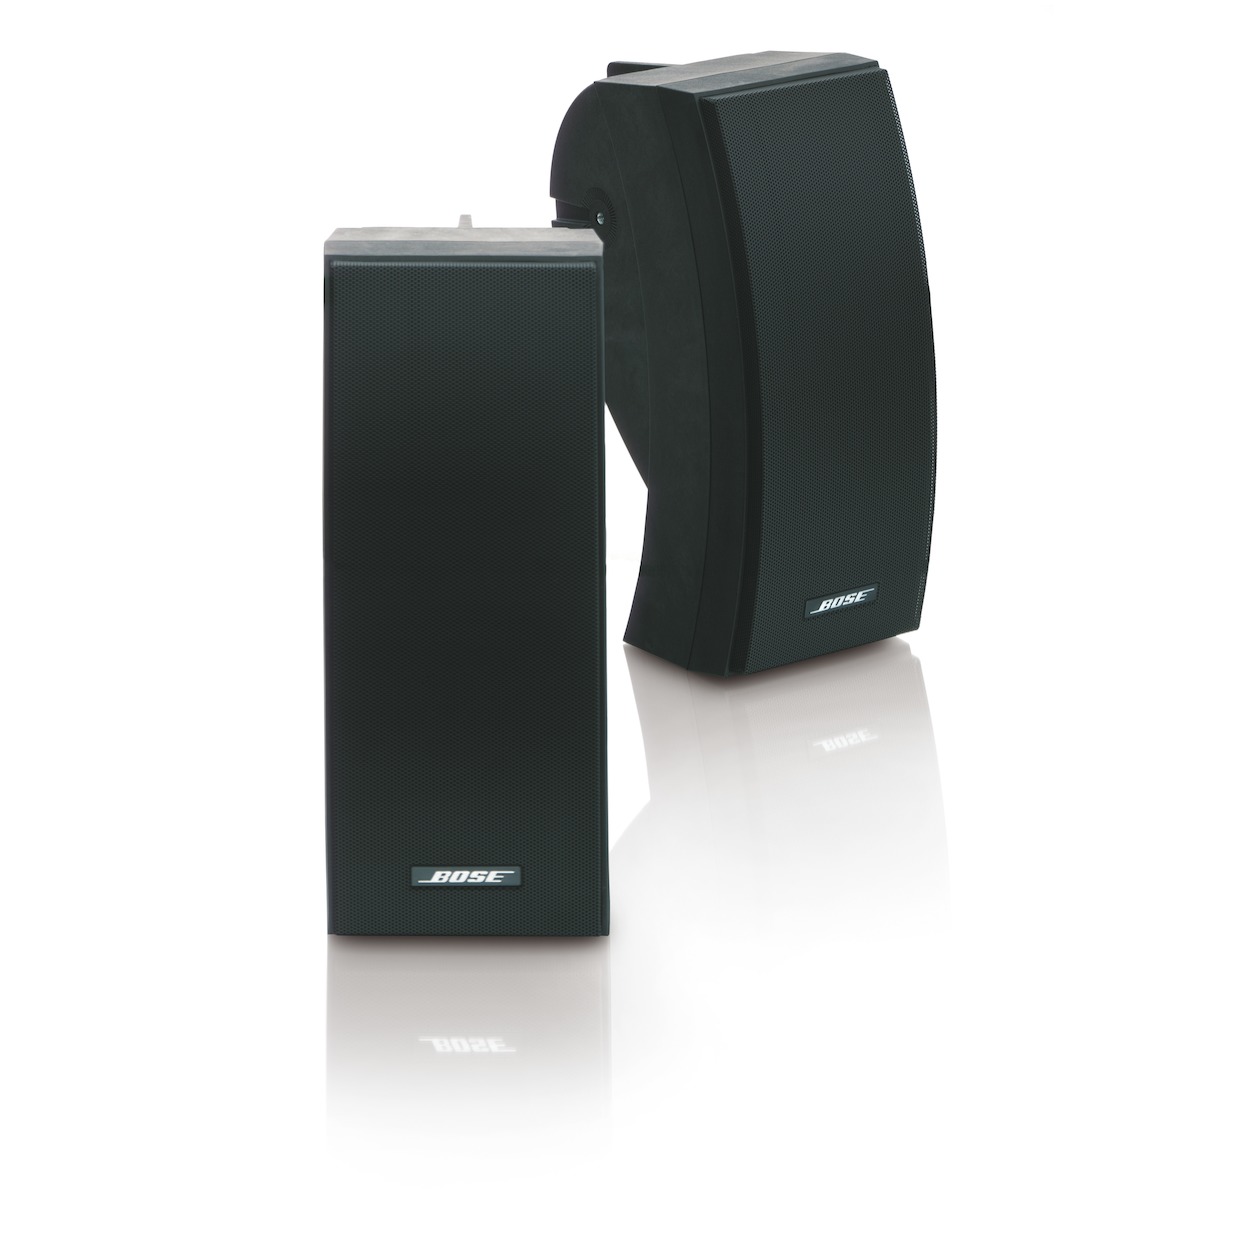 Telefoonleader - Bose 251 Environmental speaker - (including brackets) zwart